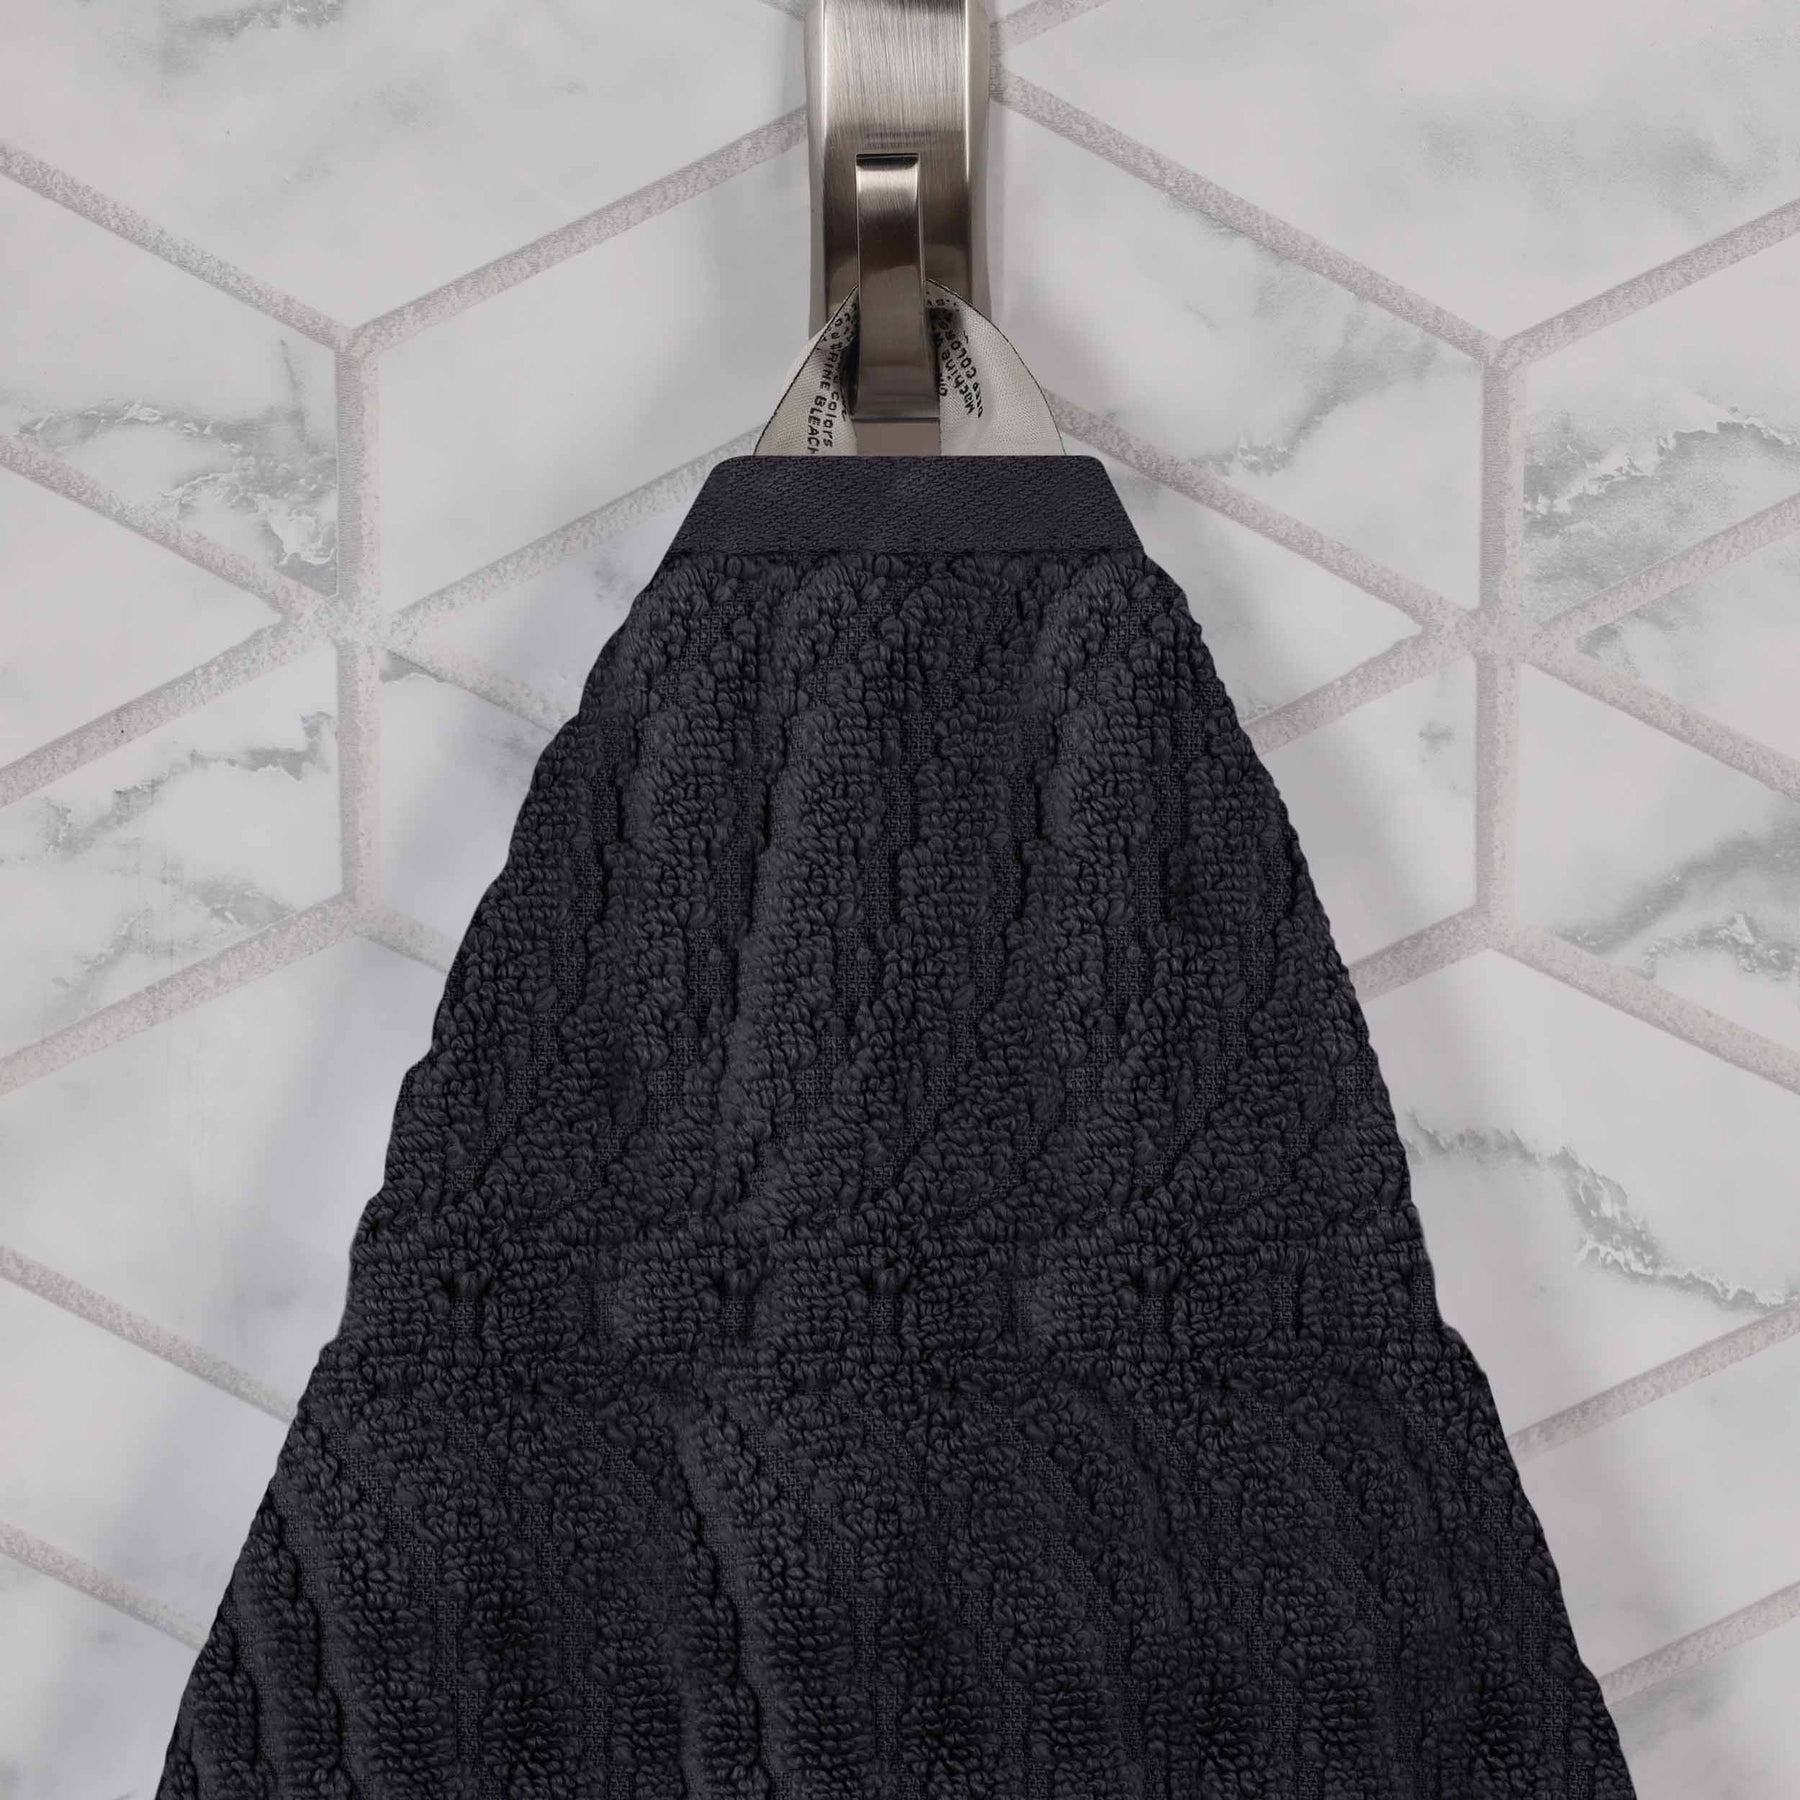 Chevron Zero Twist Cotton 3 Piece Jacquard Towel Set - Black